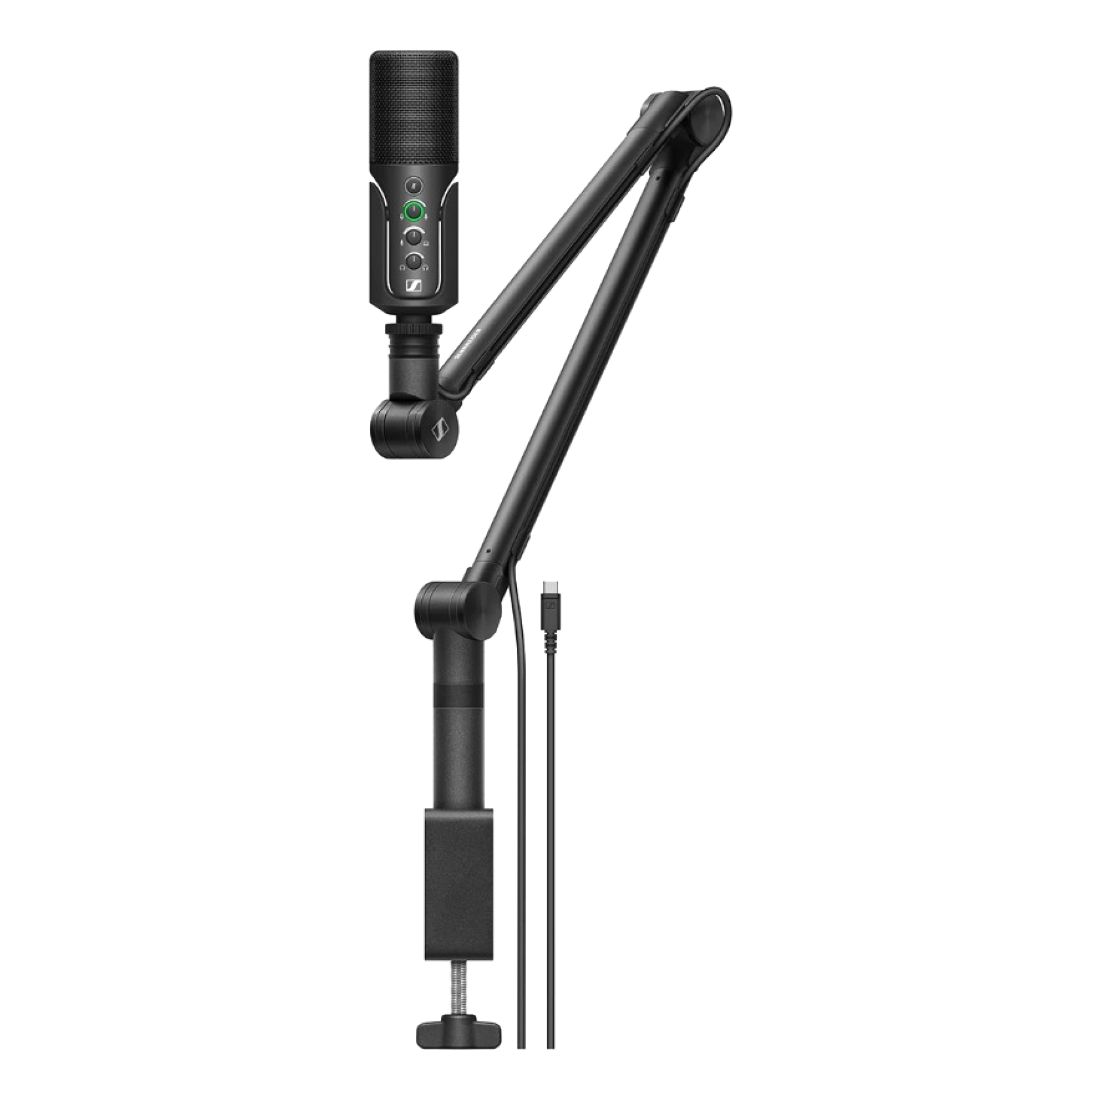 Sennheiser USB-C Microphone With Cardioid Condenser Capsule - Black